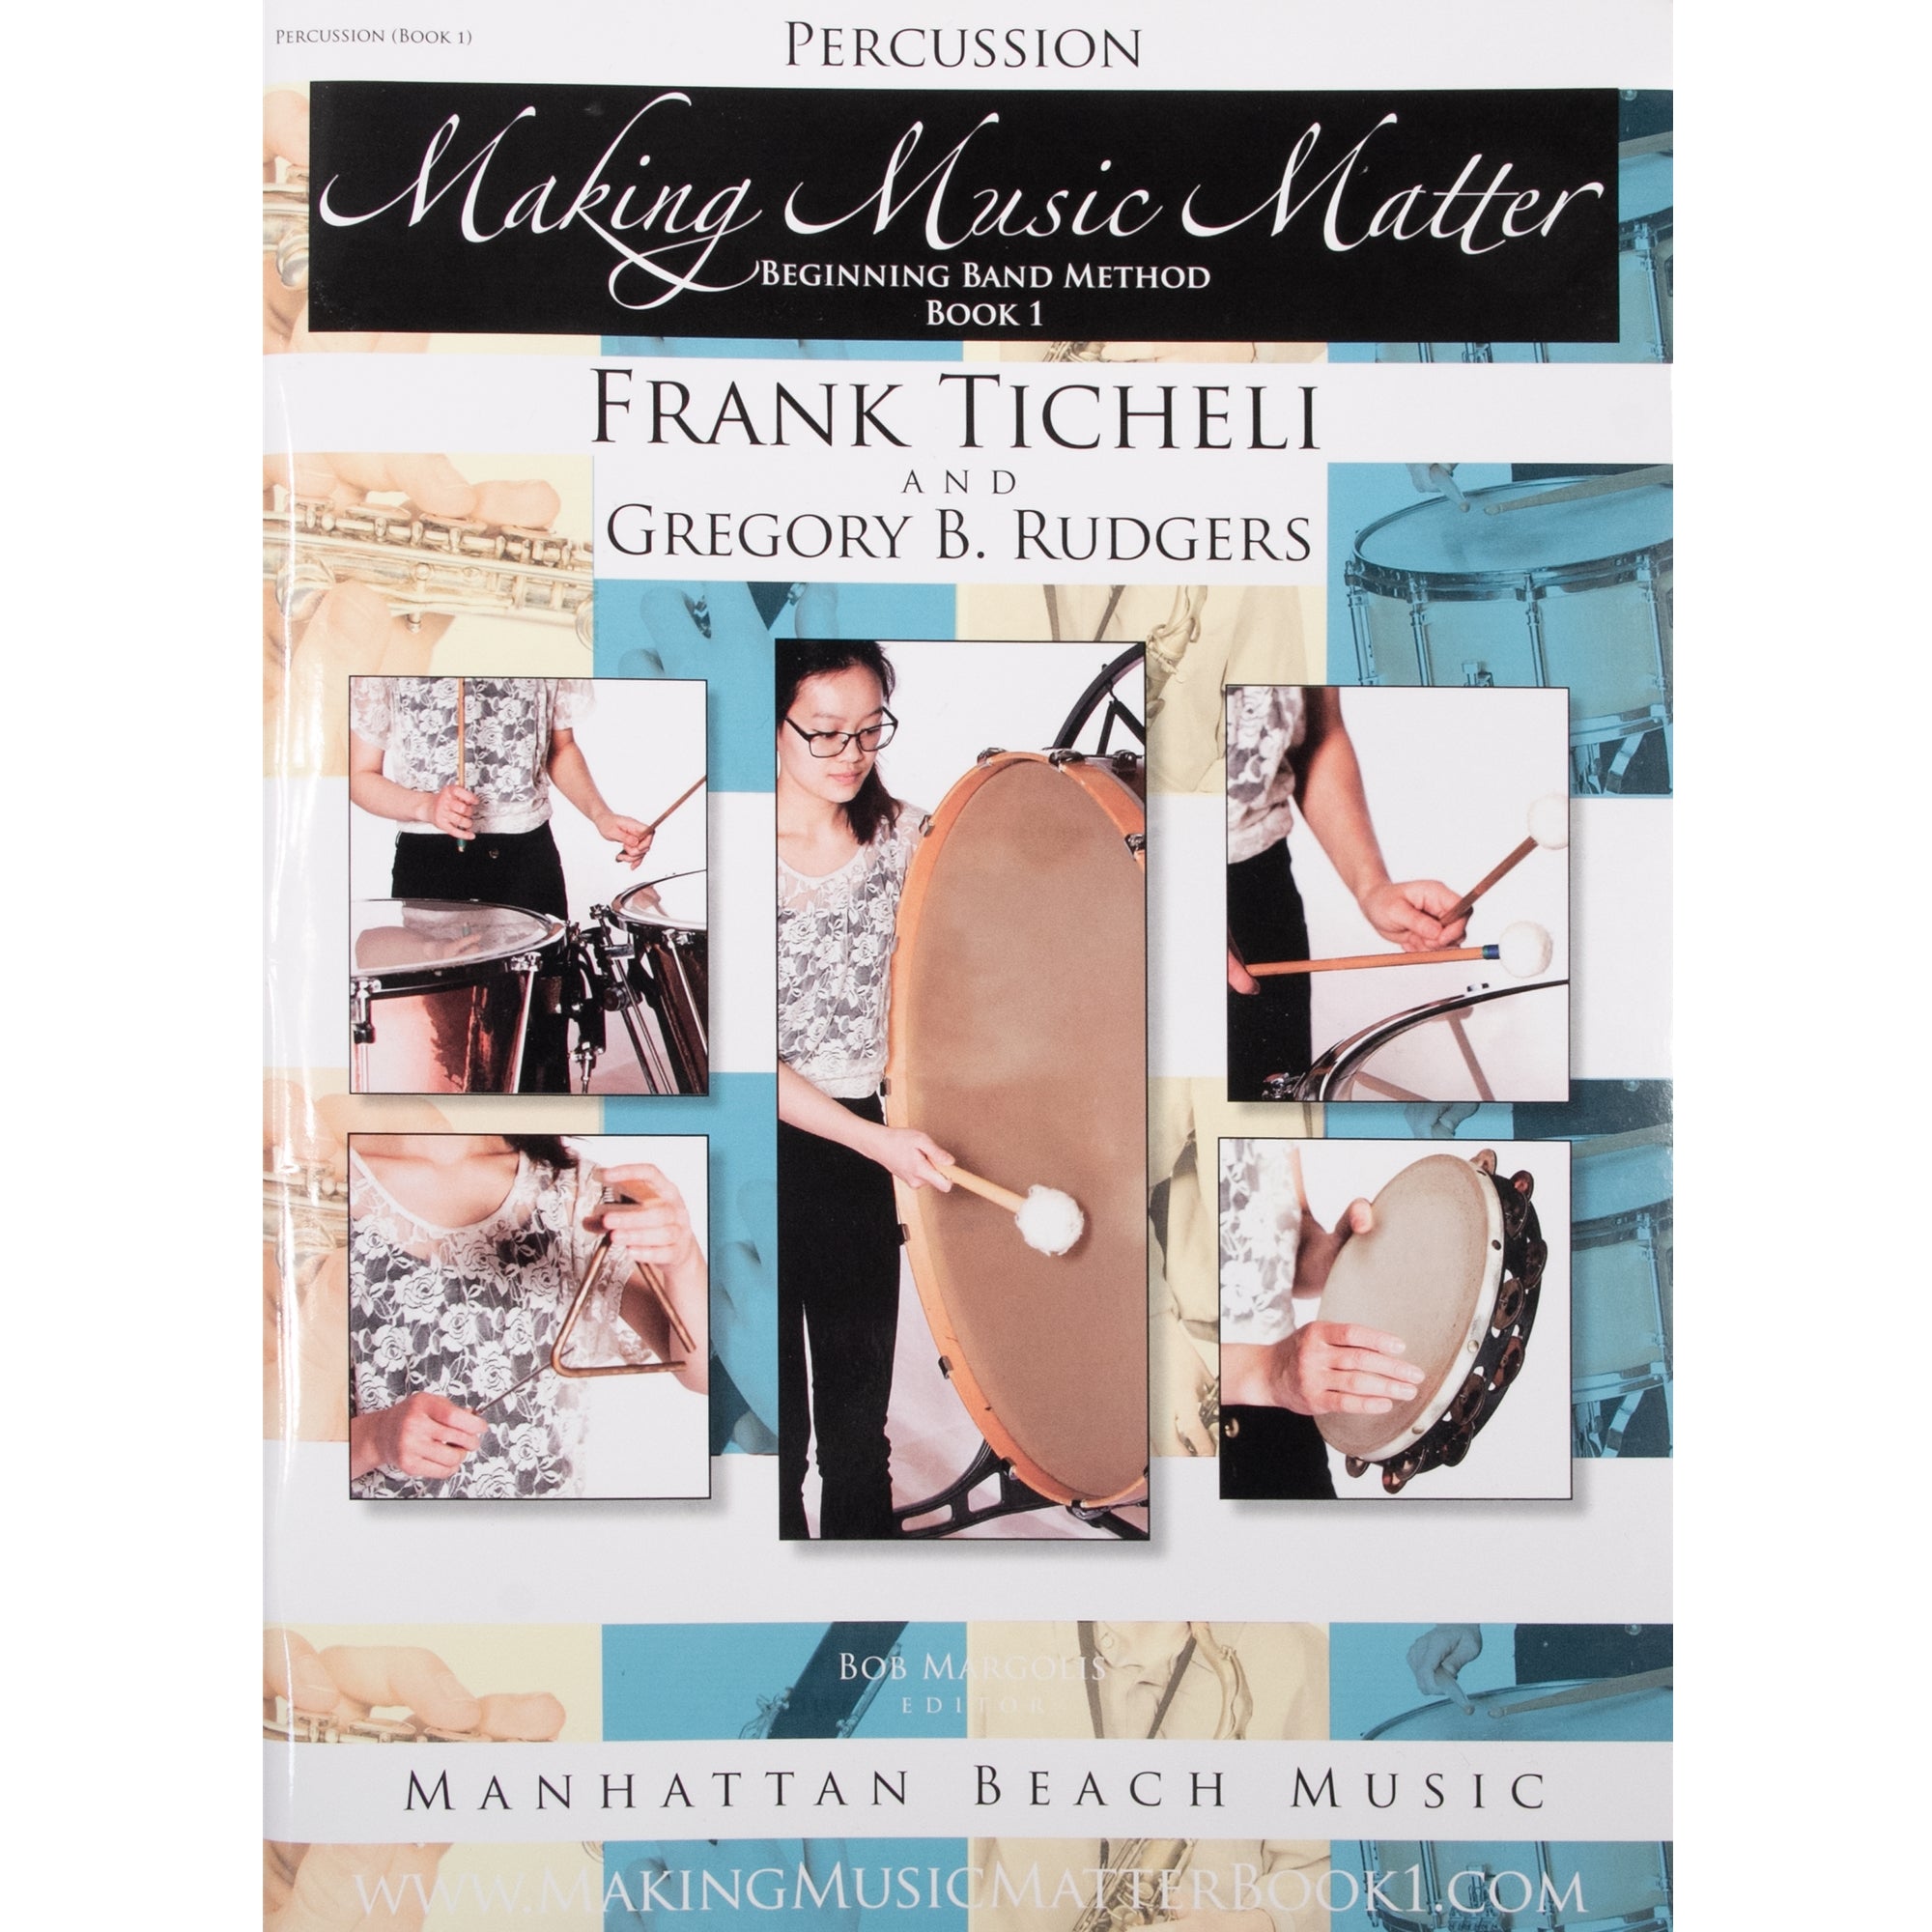 MANHATTAN BEACH 207011 Making Music Matter, Percussion (Book 1)